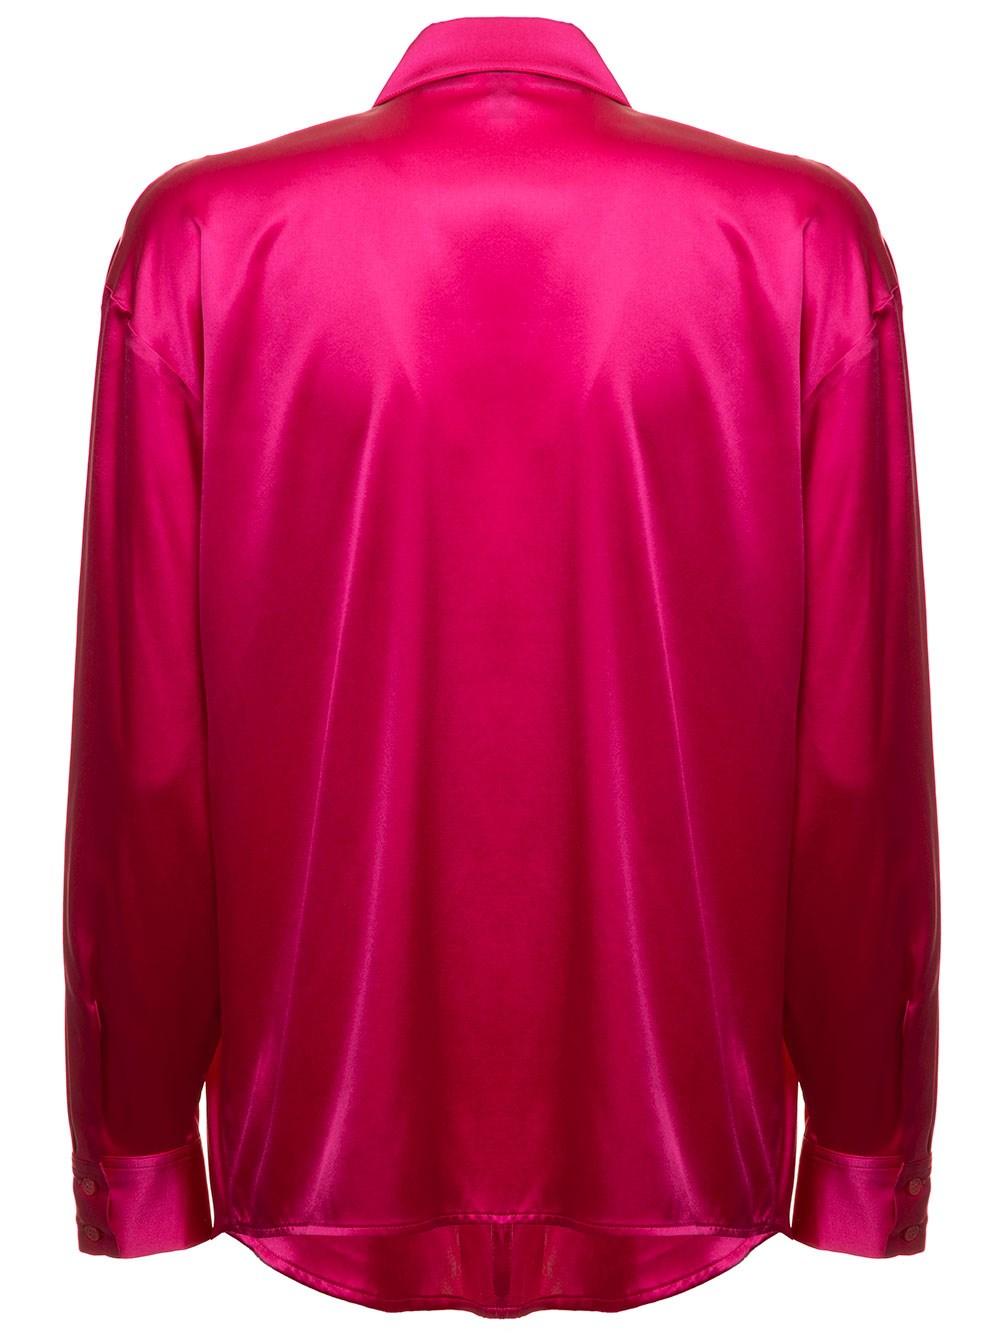 Pinko Woman Pink Satin Shirt - Save 22% | Lyst